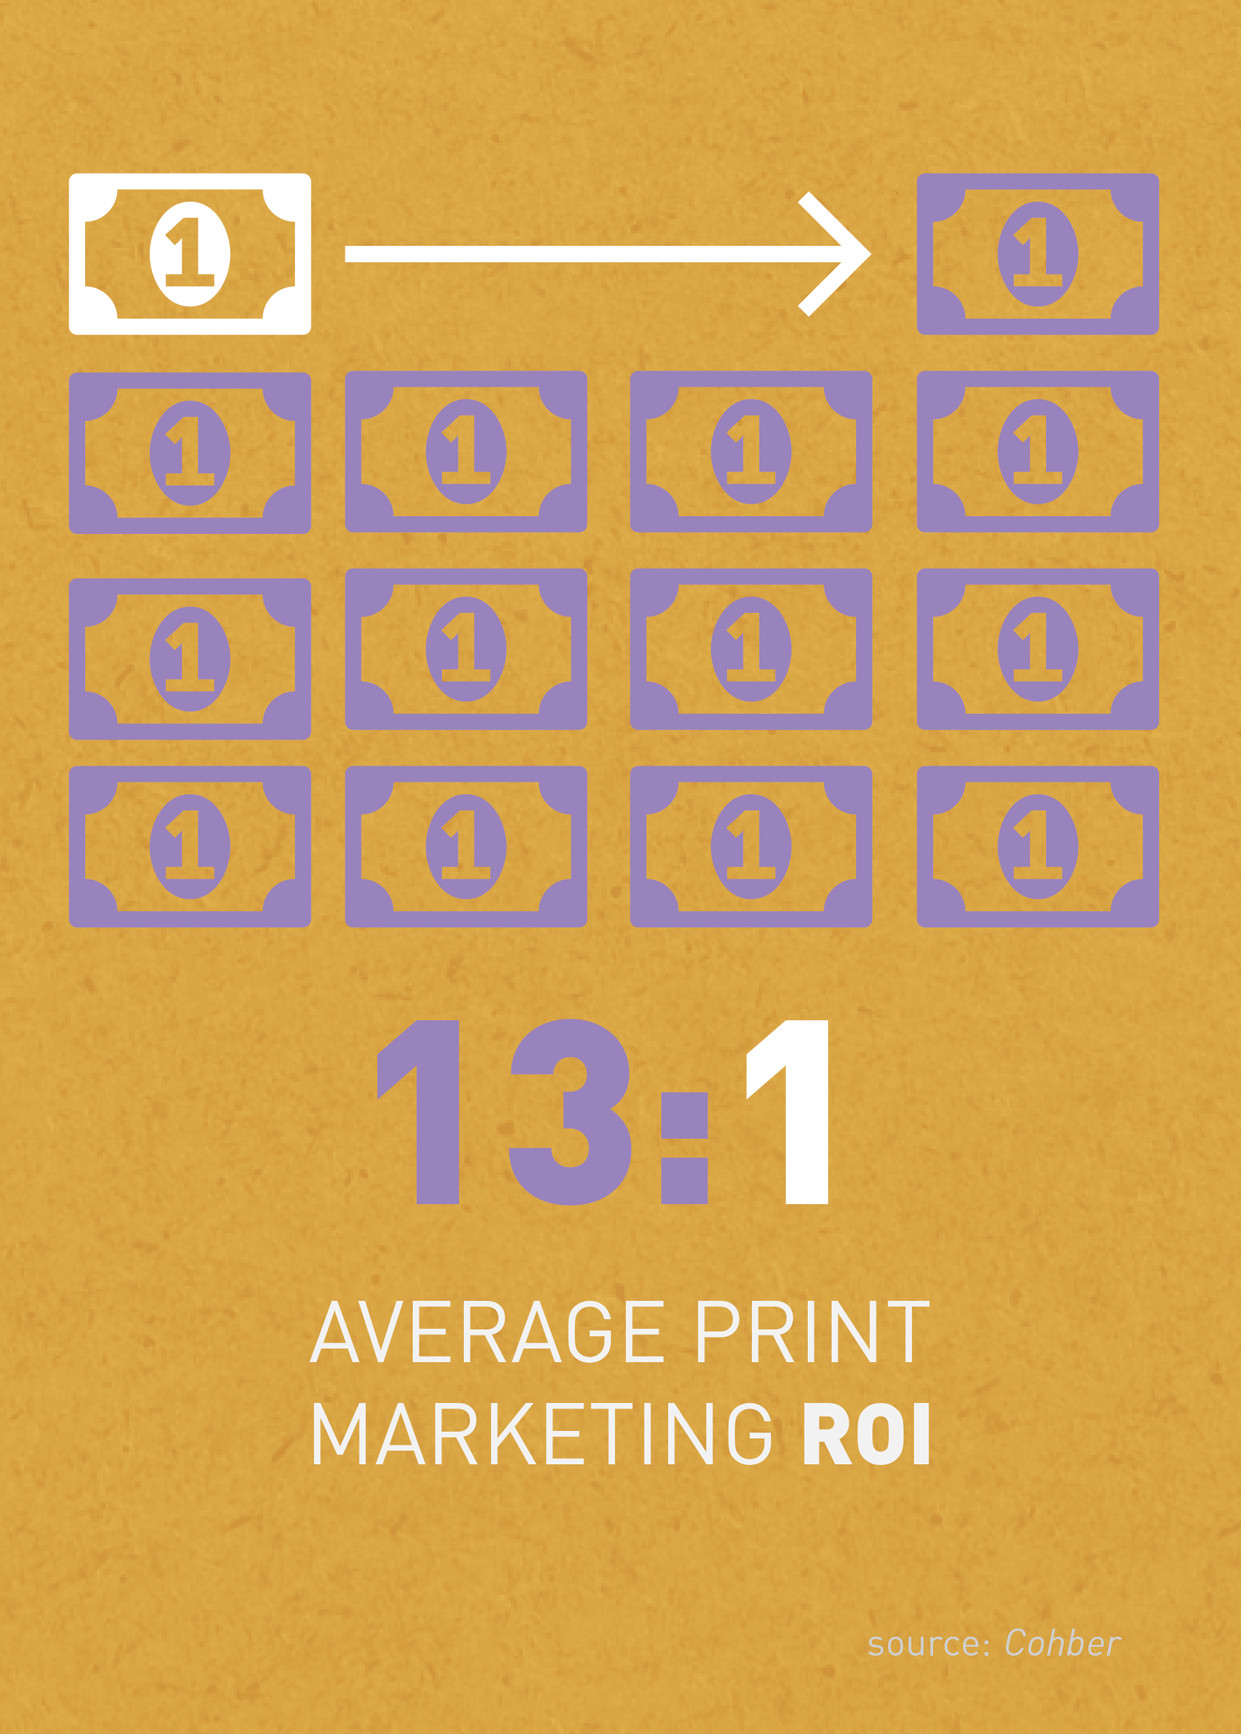 infographic: print marketing roi